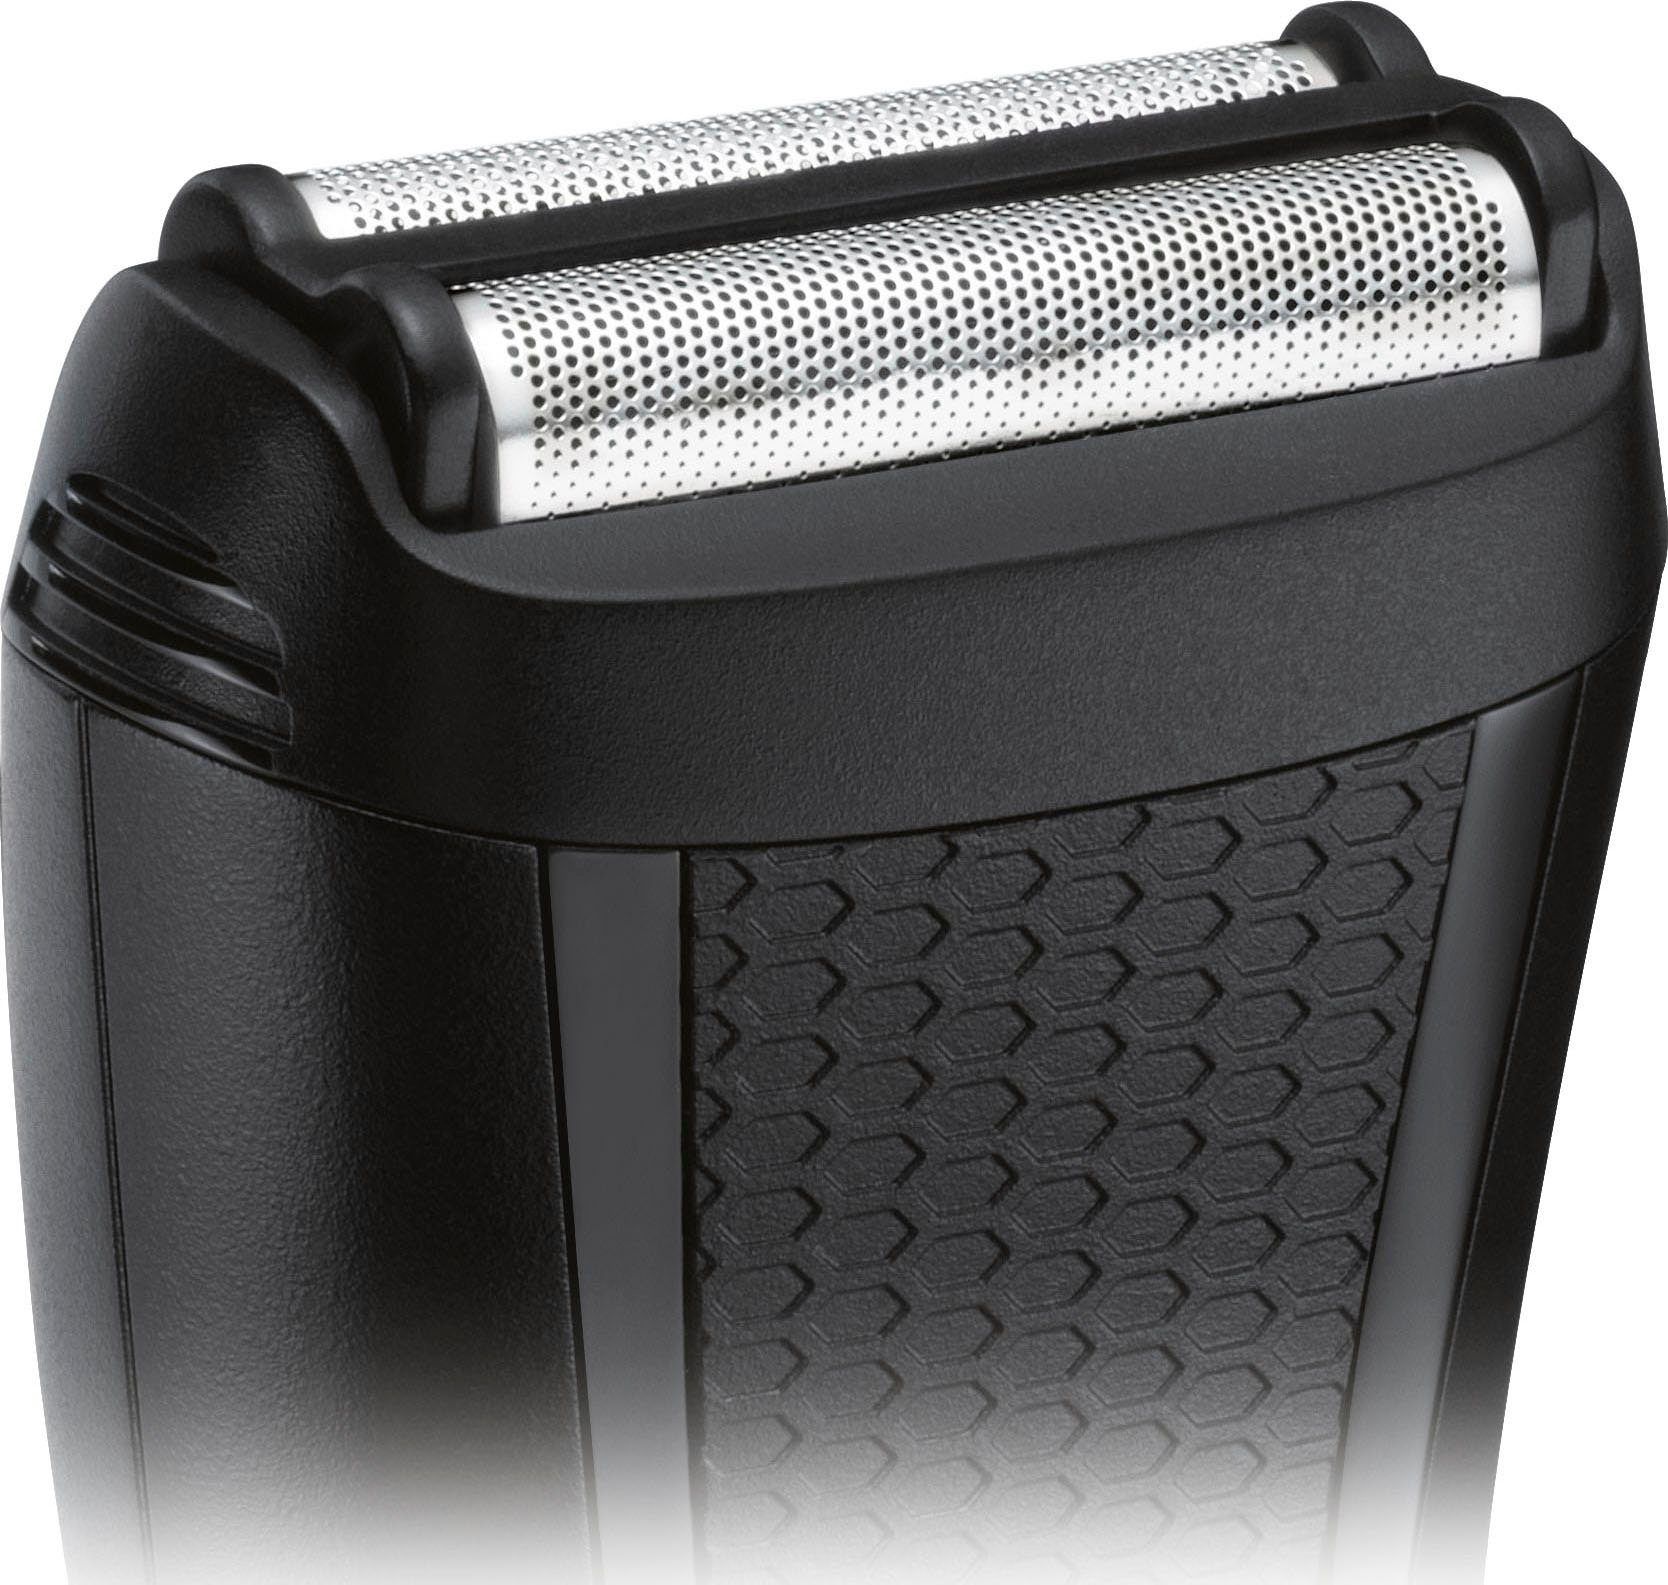 Remington Elektrorasierer Shaver integrierter Foil Style Pop-Up-Trimmer, F2, Präzisionstrimmer, Anzeige, Series LED abwaschbar, F2002 Aufsätze: 1, Präzisionstrimmer